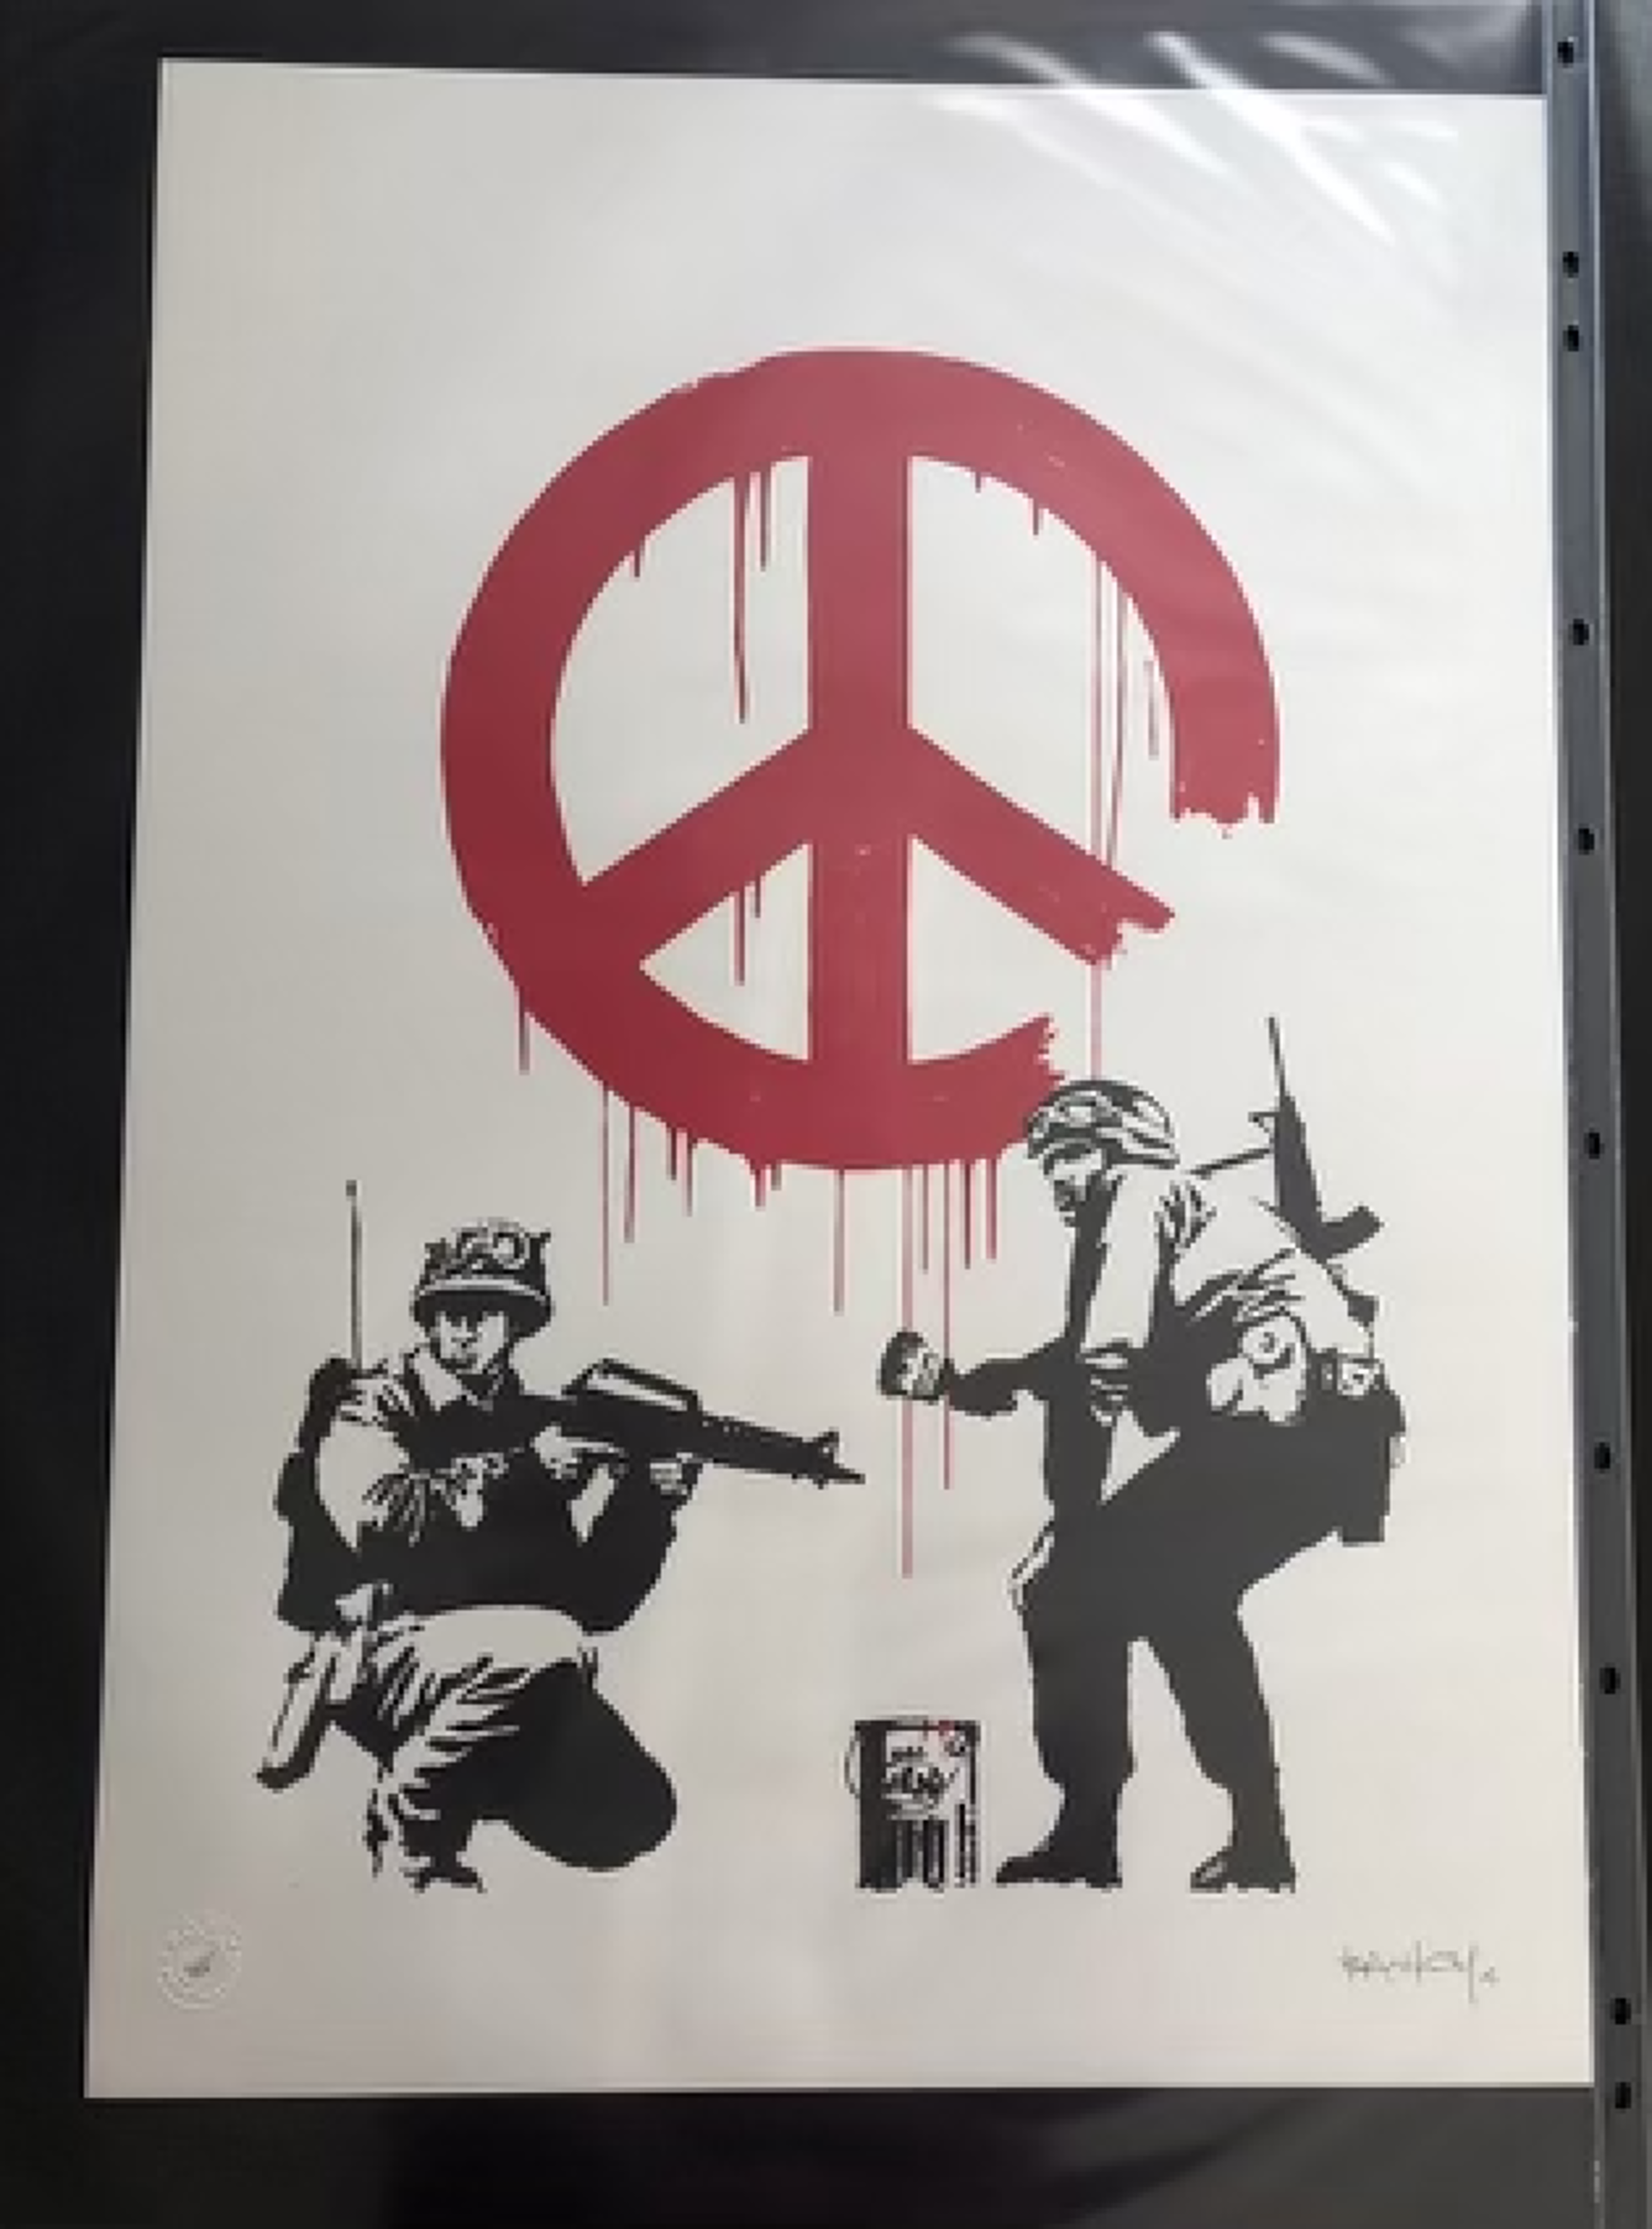 CDN Soldiers by Banksy